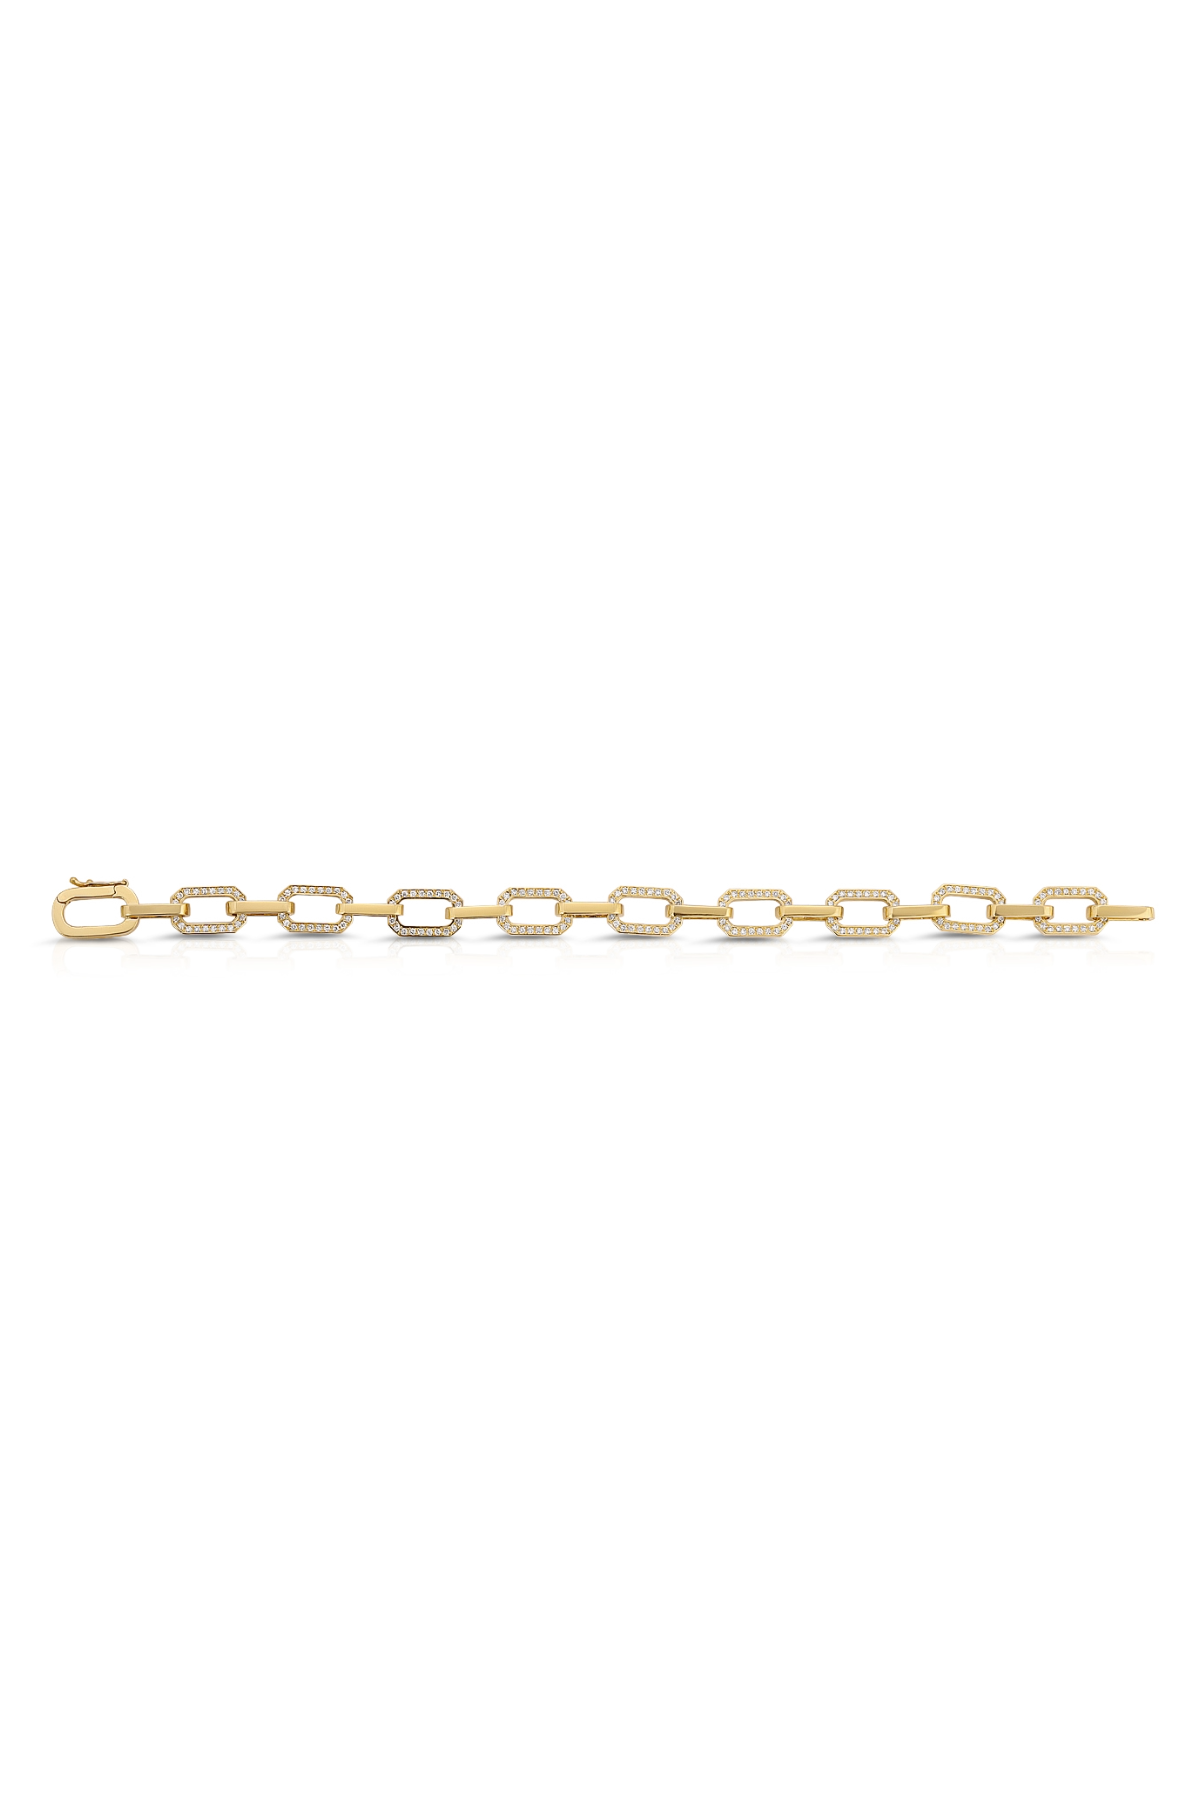 14K Yellow Gold Chain Bracelet with Diamond Links